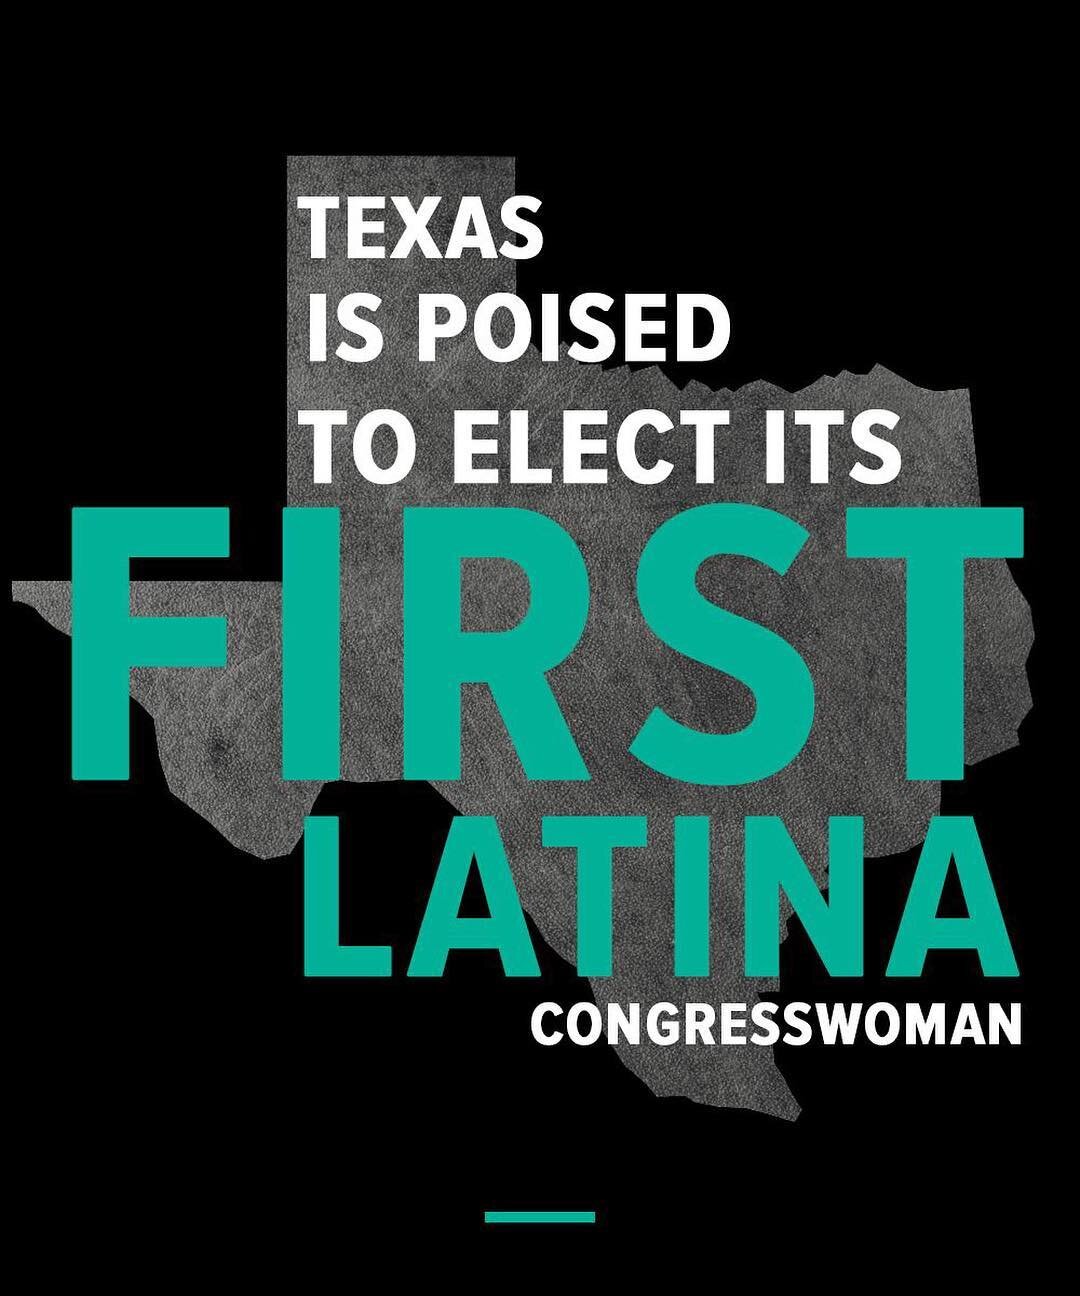 First Latina Congresswoman